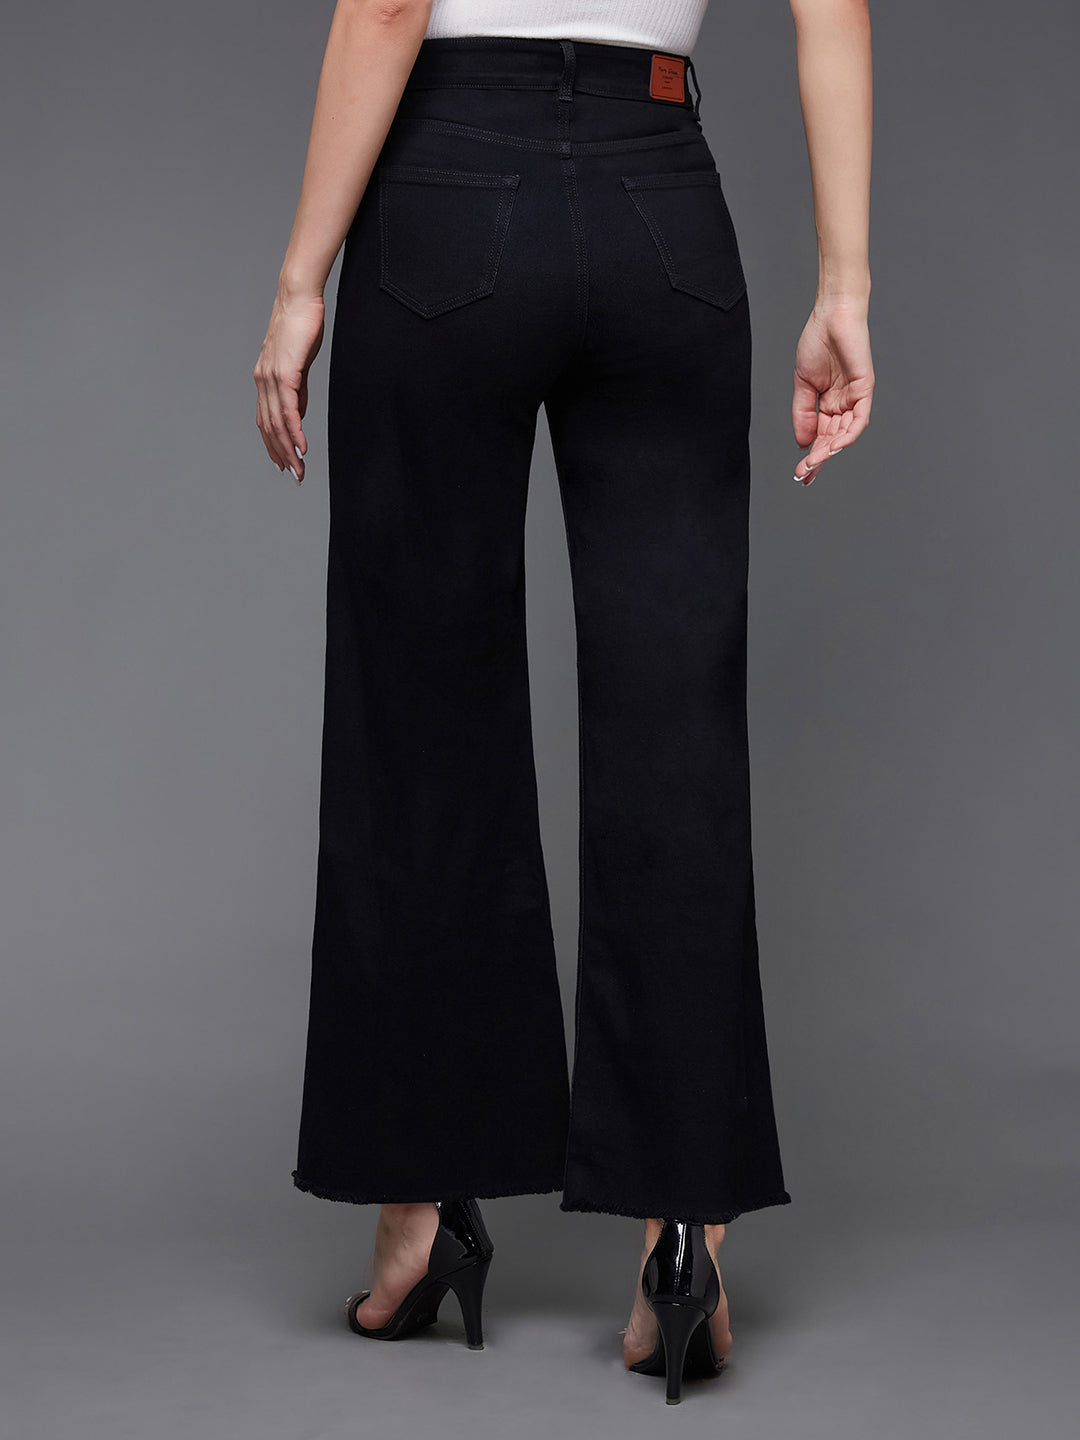 Women's Black Wide Leg High Rise Clean Look Regular-Length Stretchable Denim Jeans